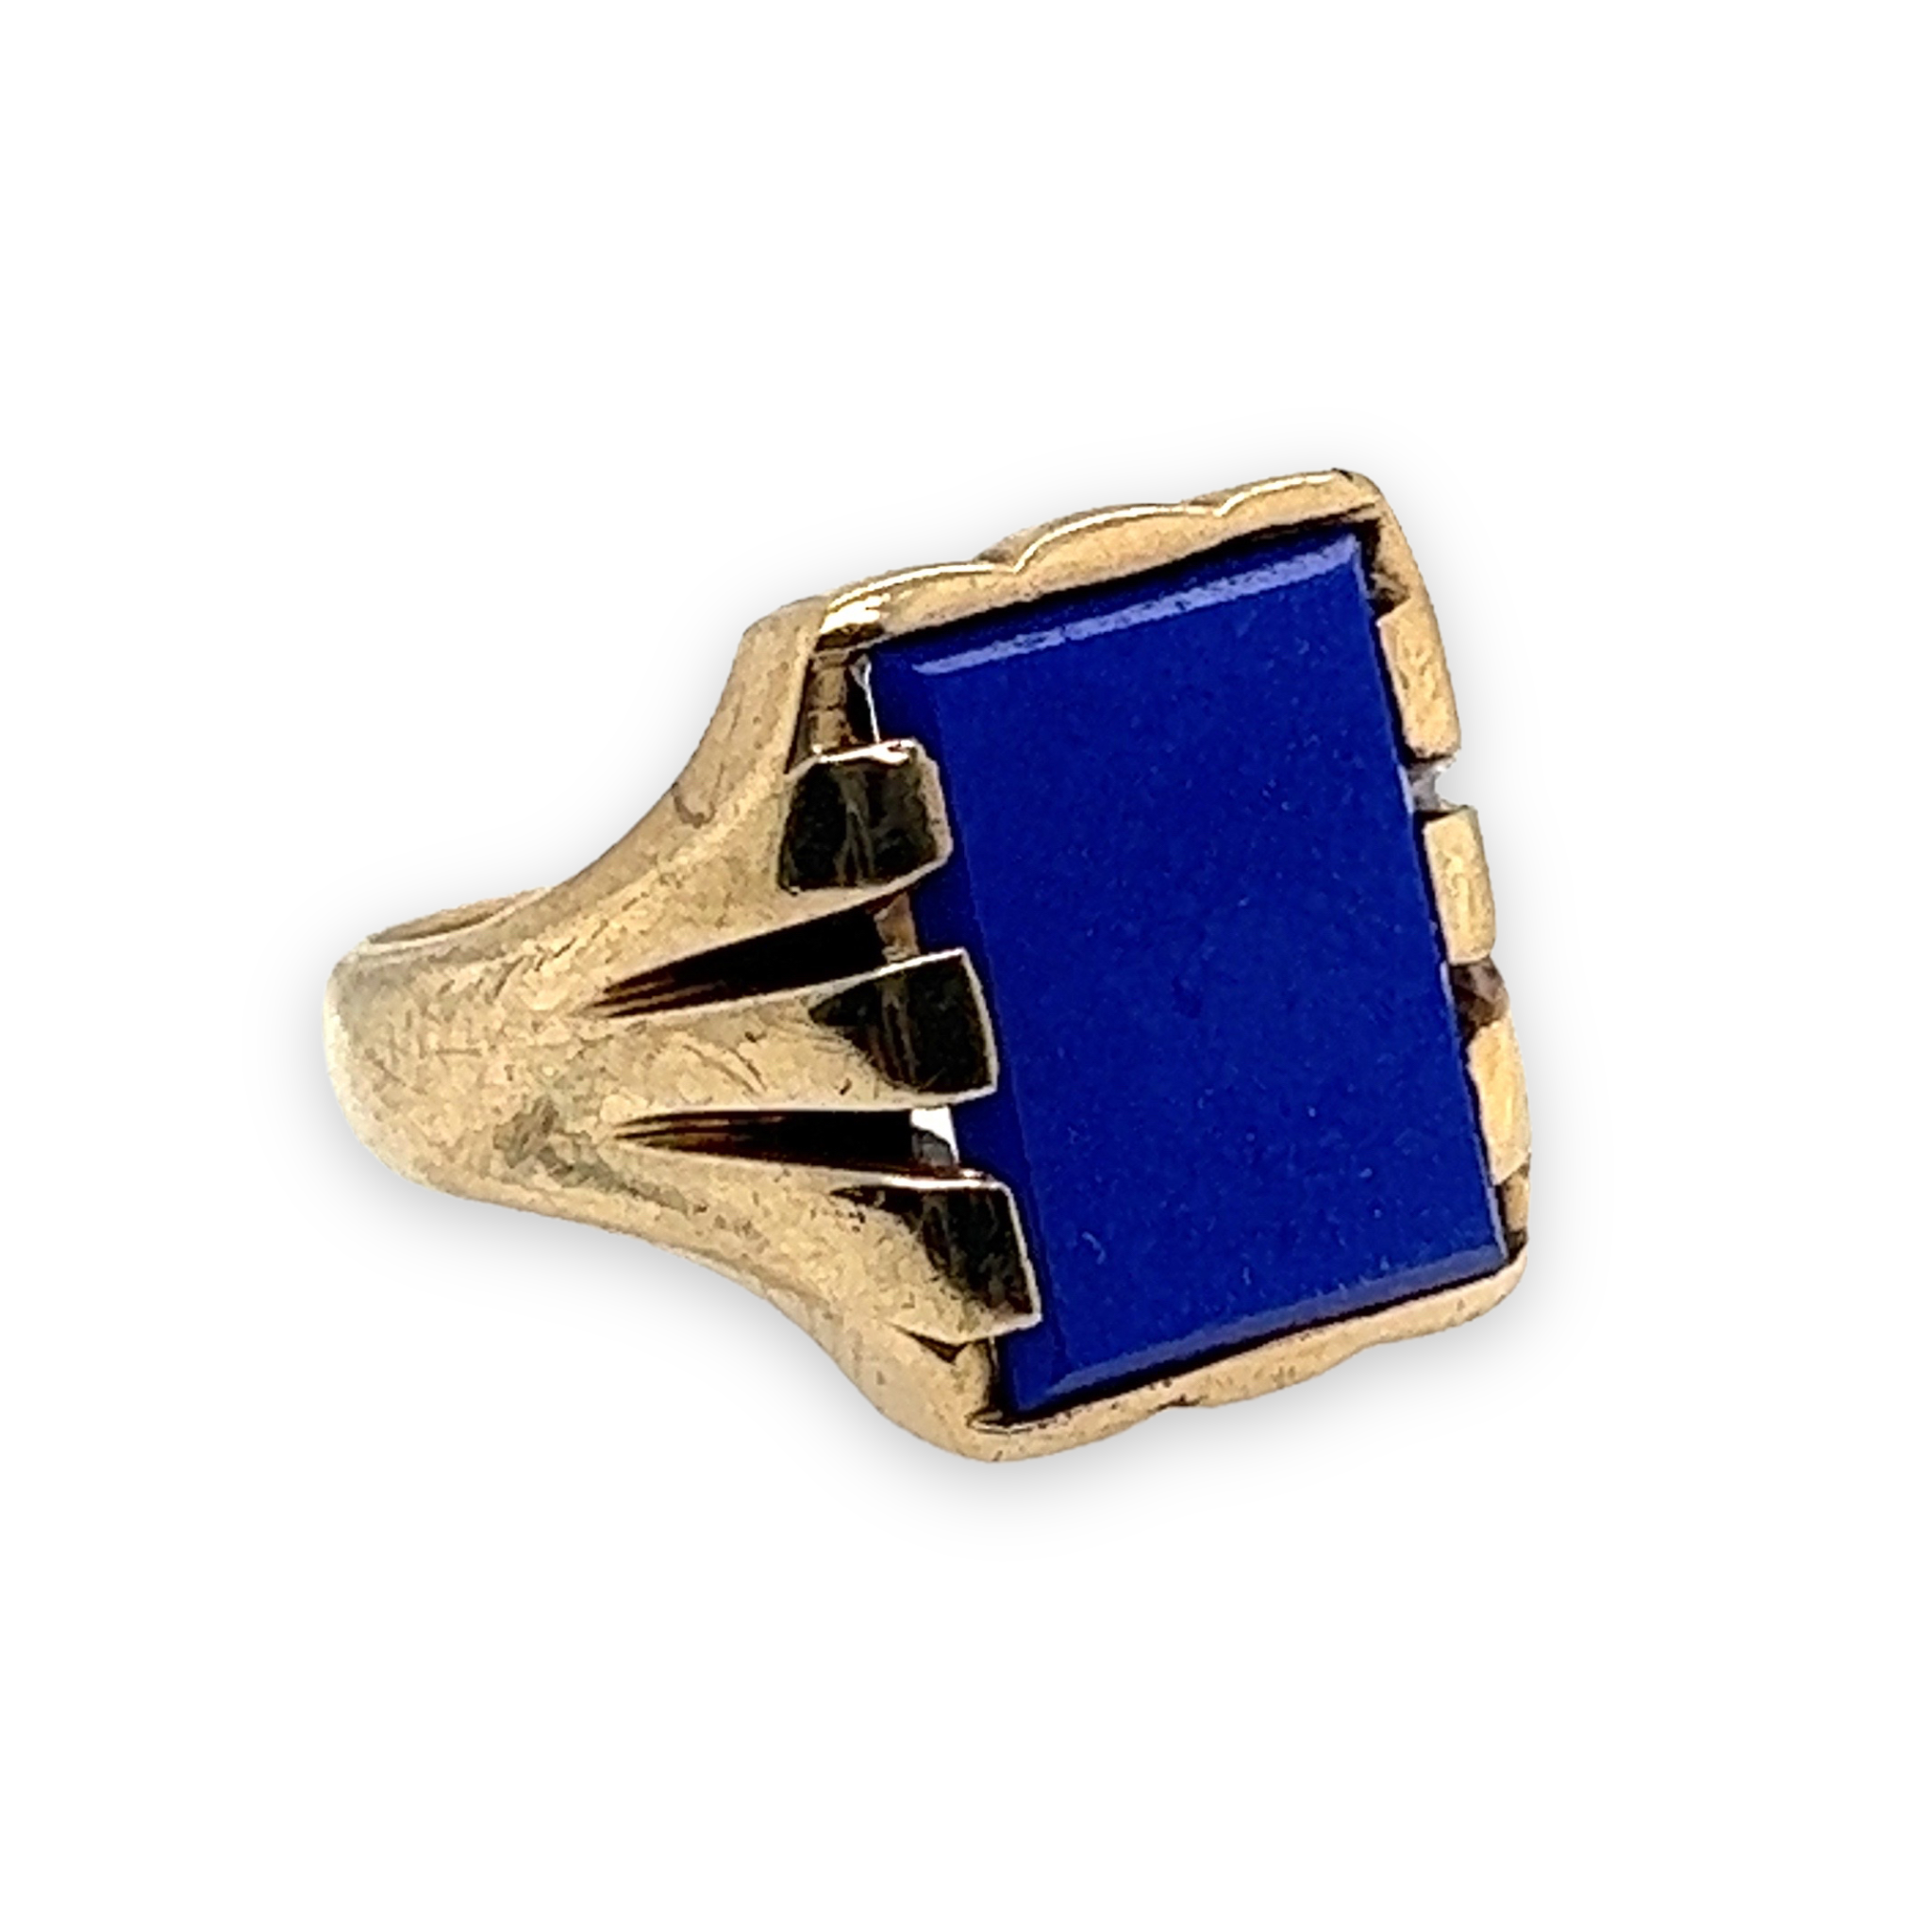 Gold & Lapis Lazuli Signet Ring - Wildsmith Jewellery Signet Ring